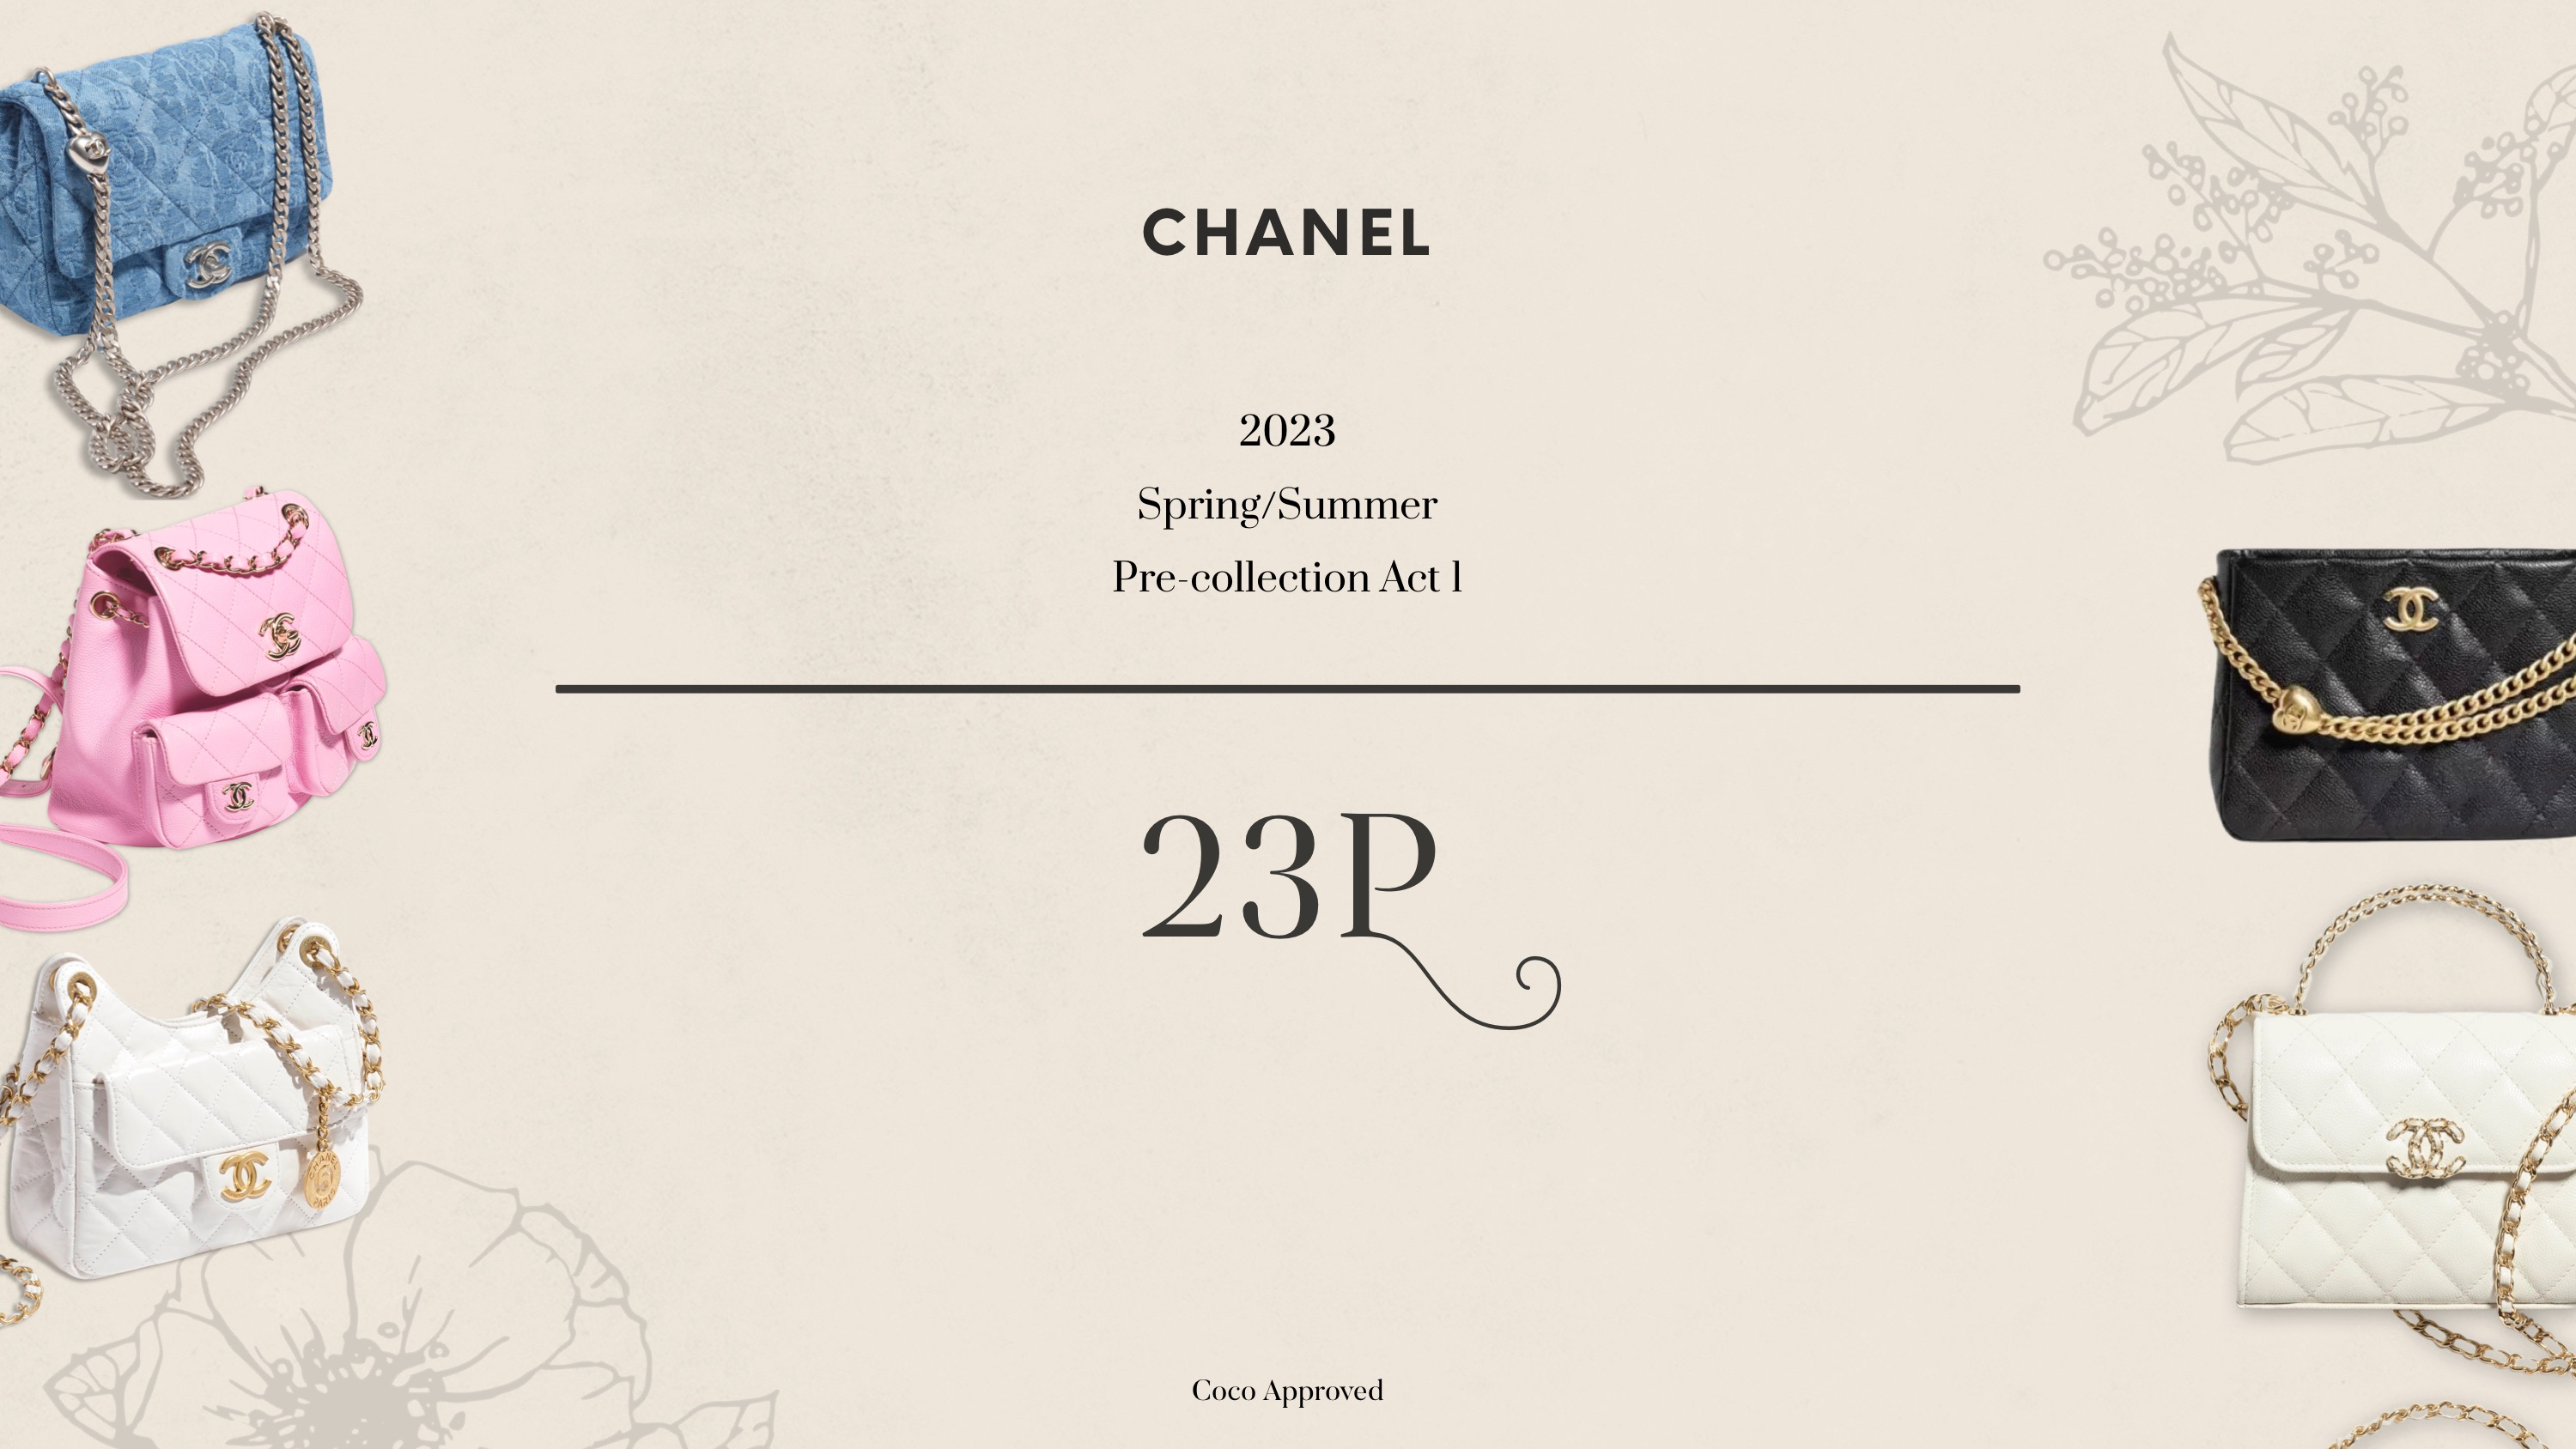 Chanel Spring Summer 2023 Seasonal Collection Act 1